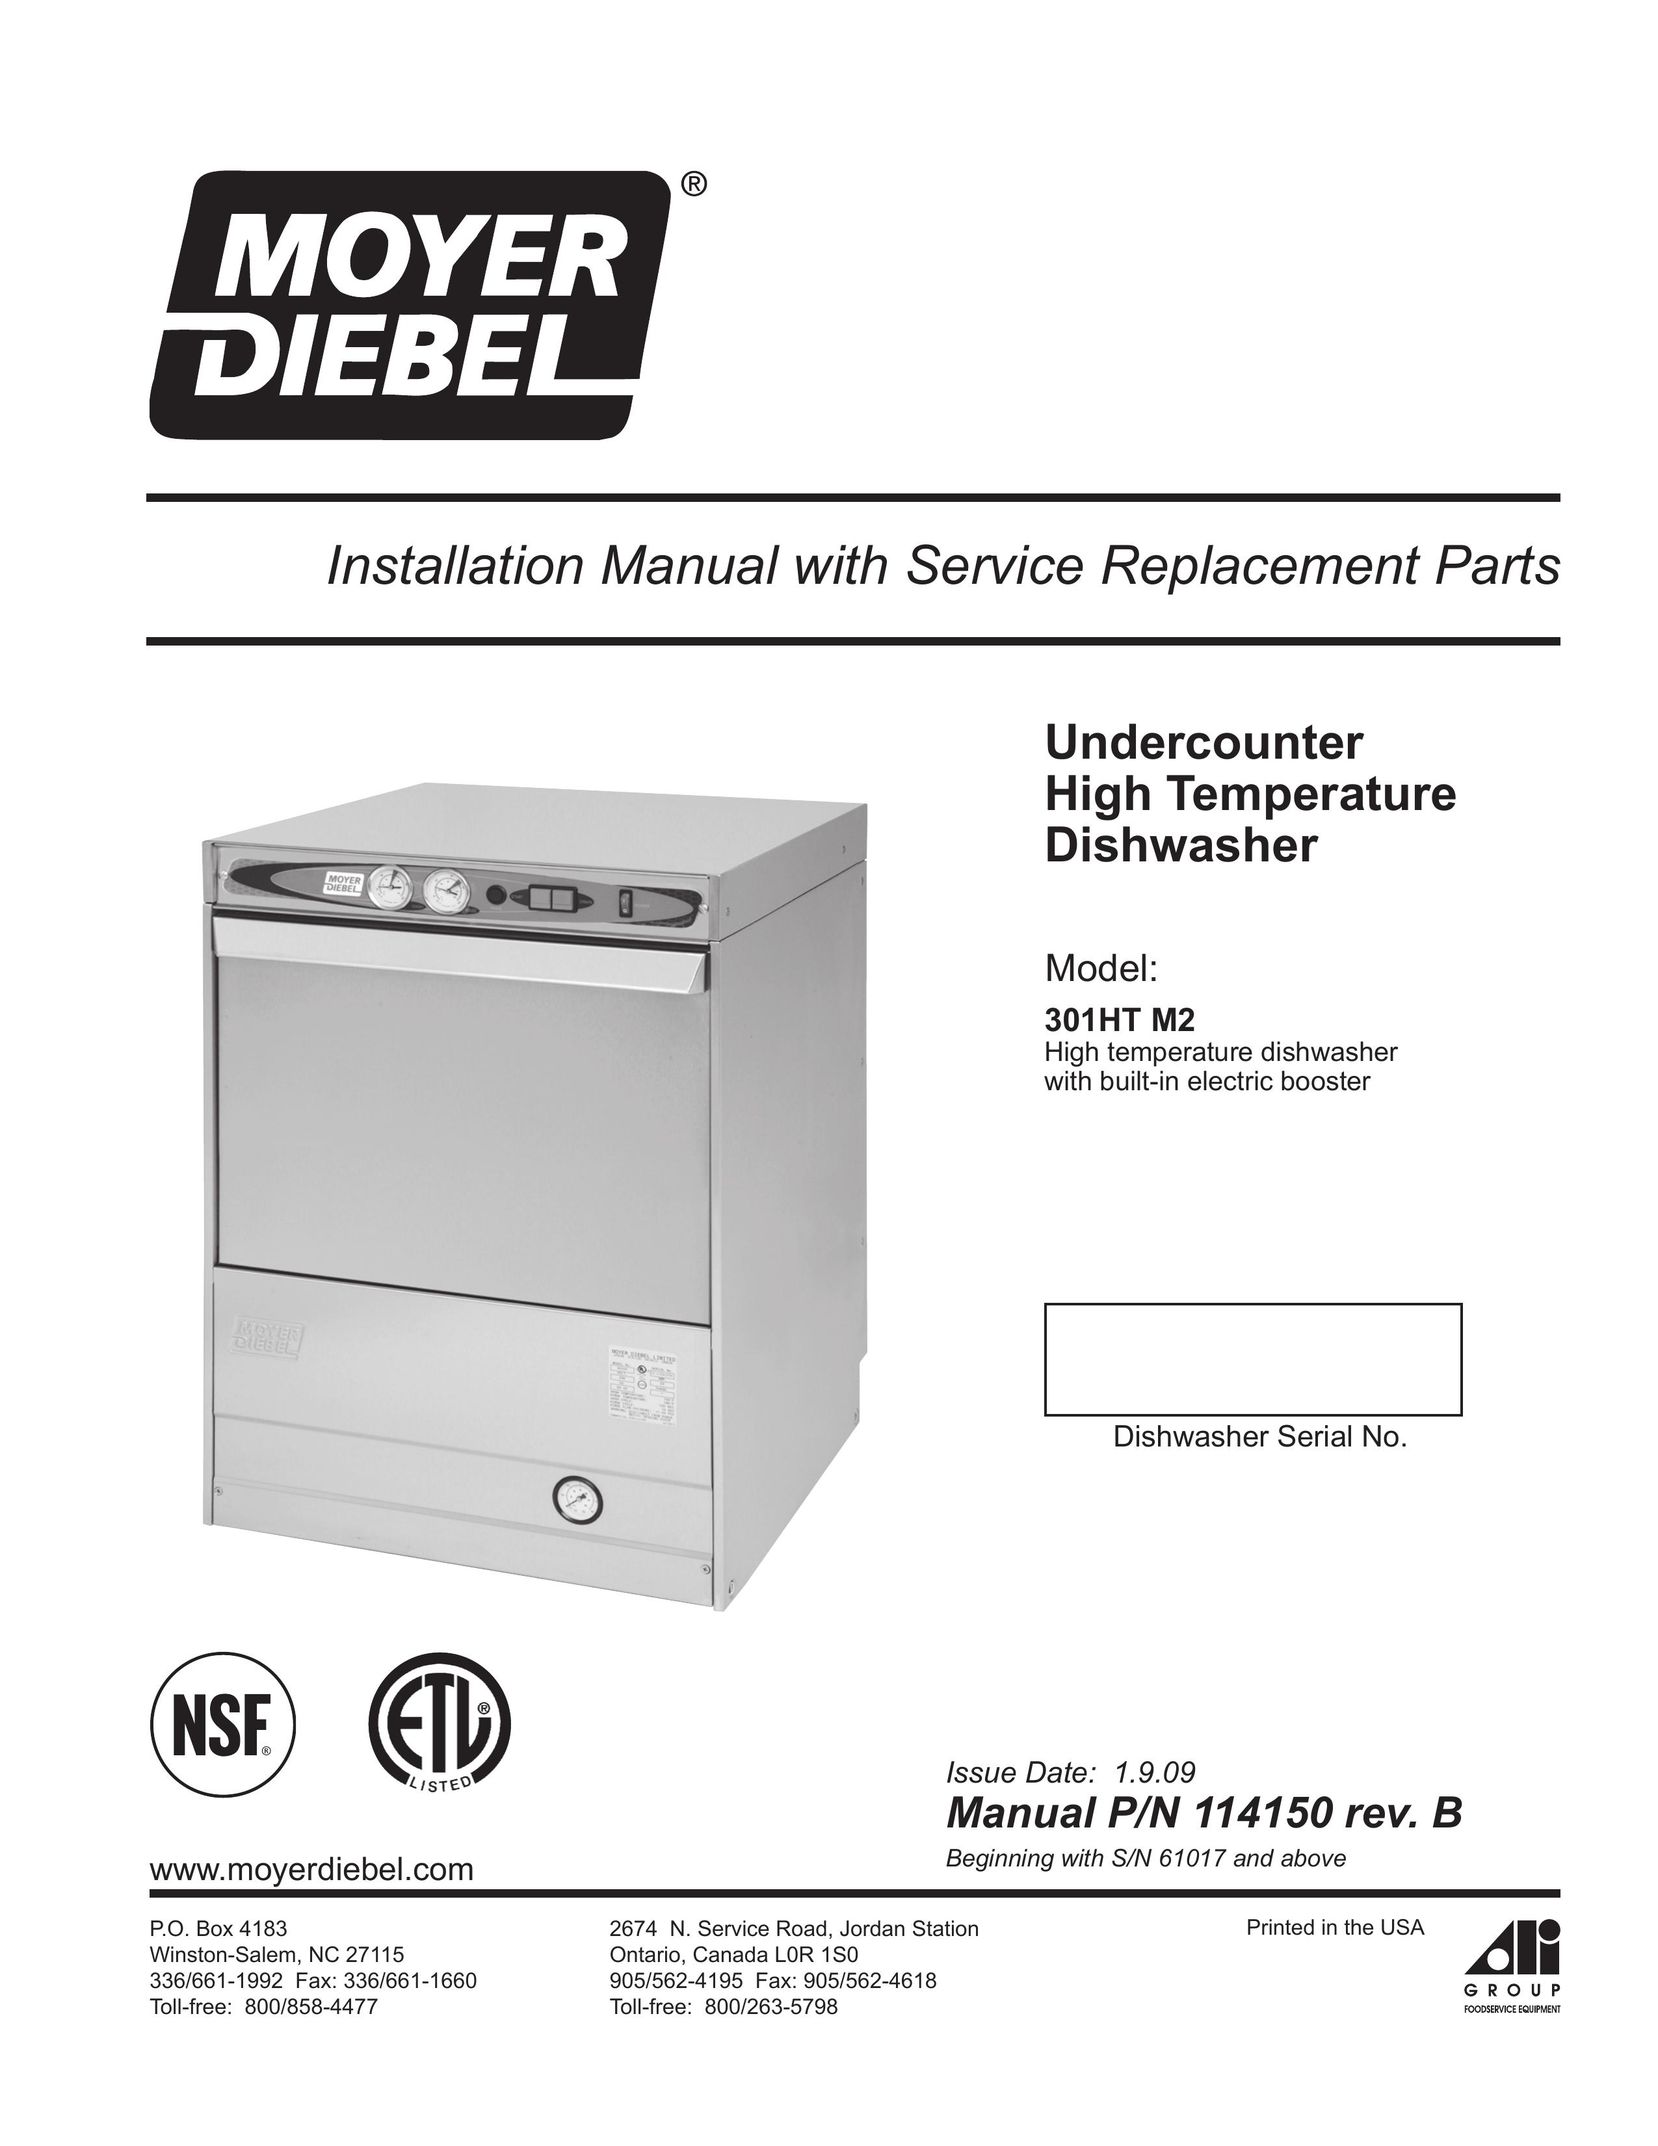 Moyer Diebel 301HT M2 Dishwasher User Manual